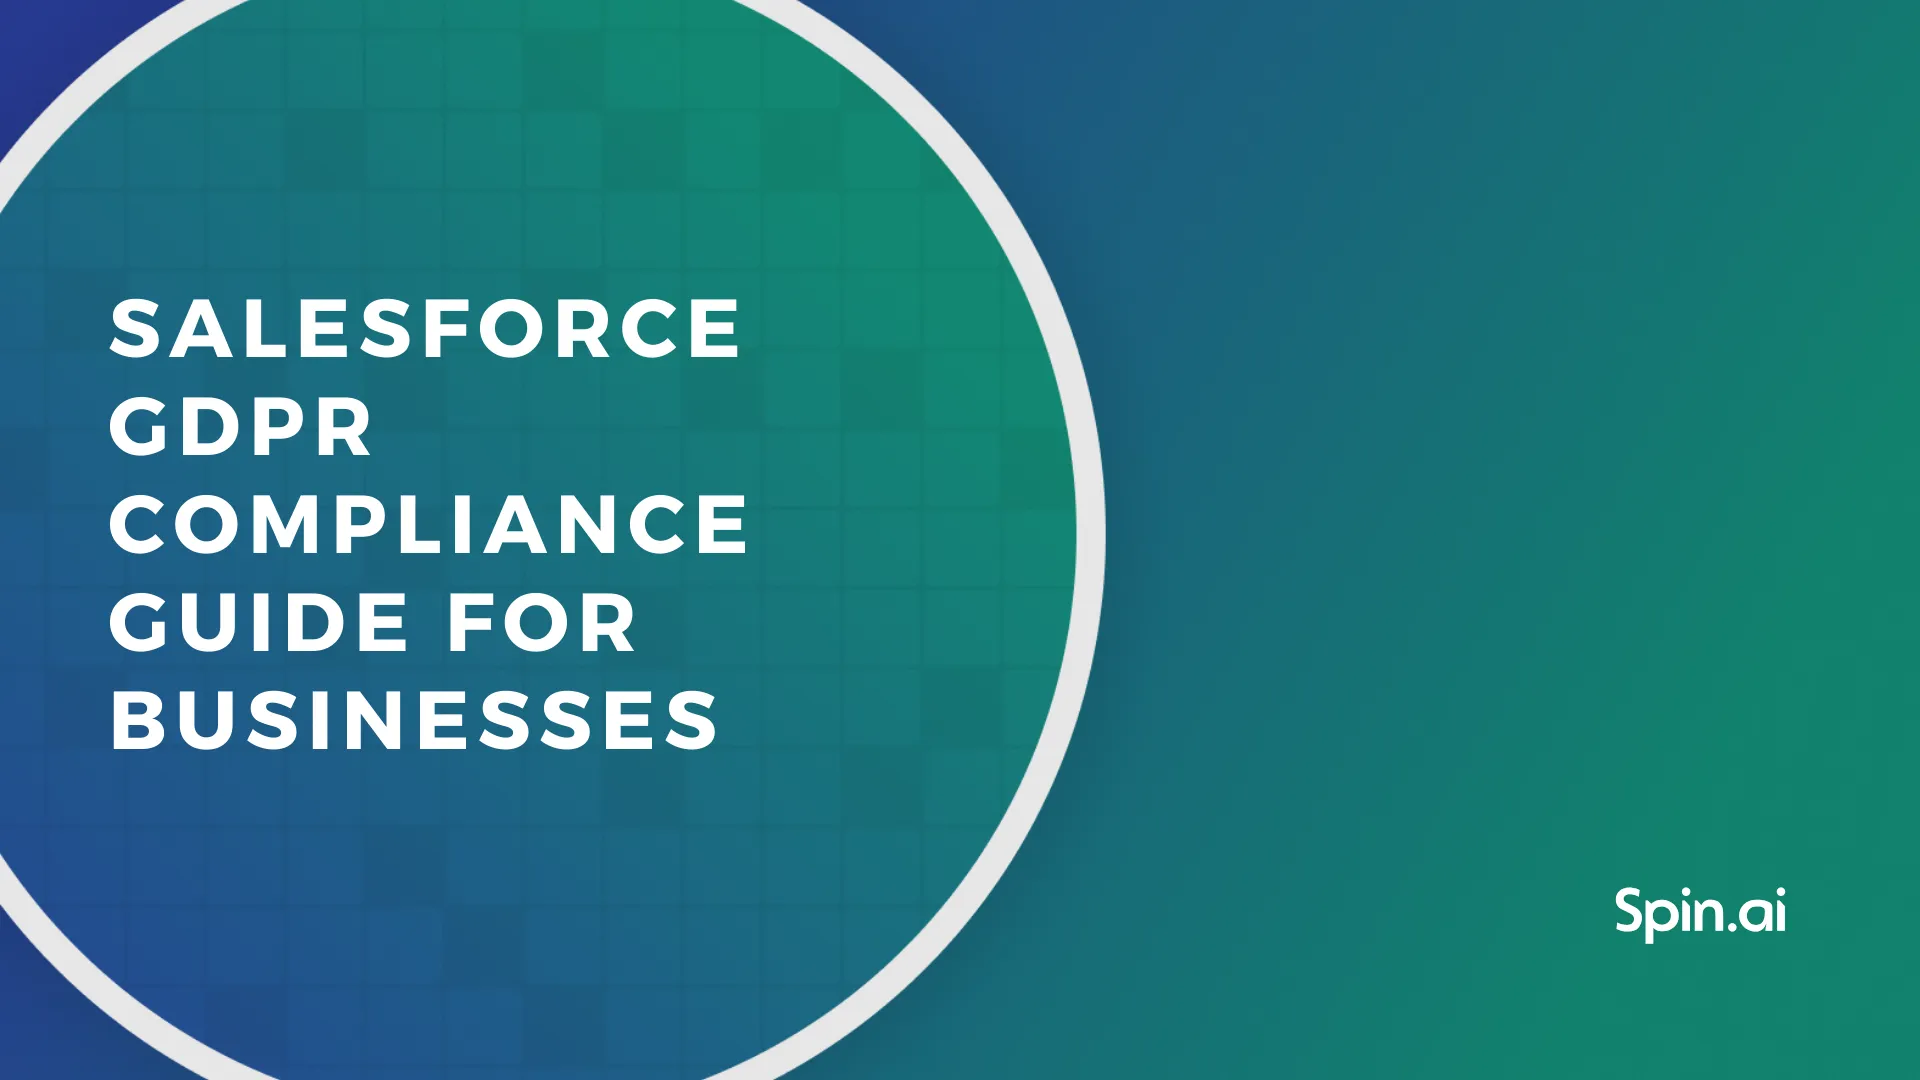 Backup Essential for Salesforce GDPR Compliance Guide Complete Salesforce GDPR Compliance Guide for Businesses